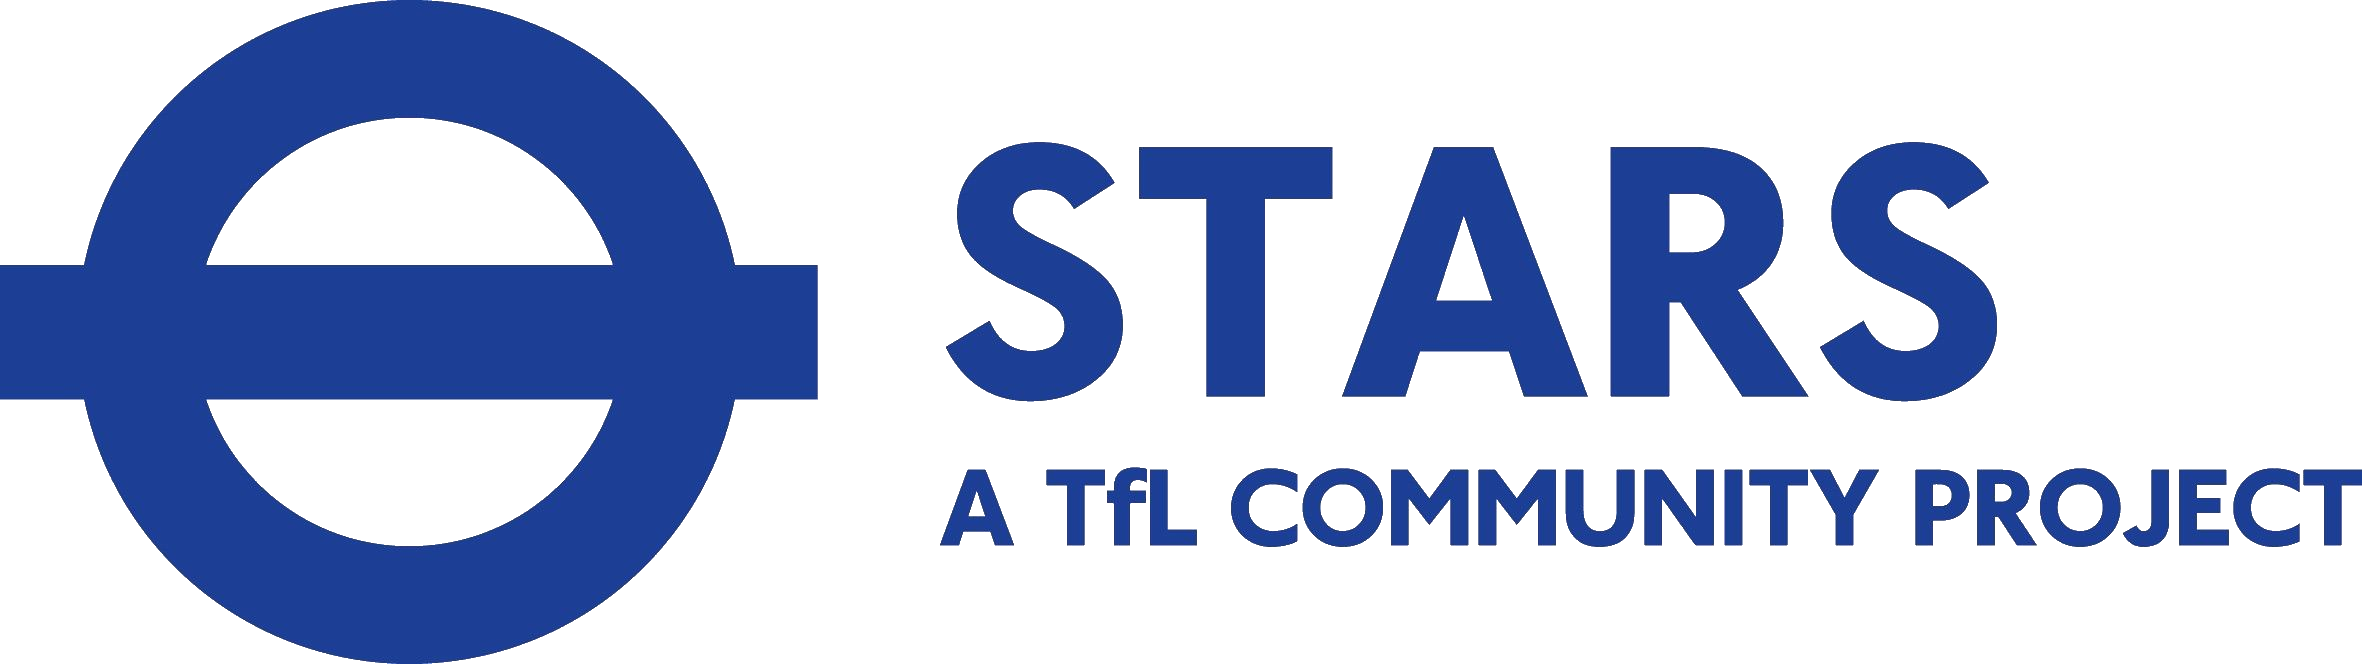 Stars - A TfL Community Project